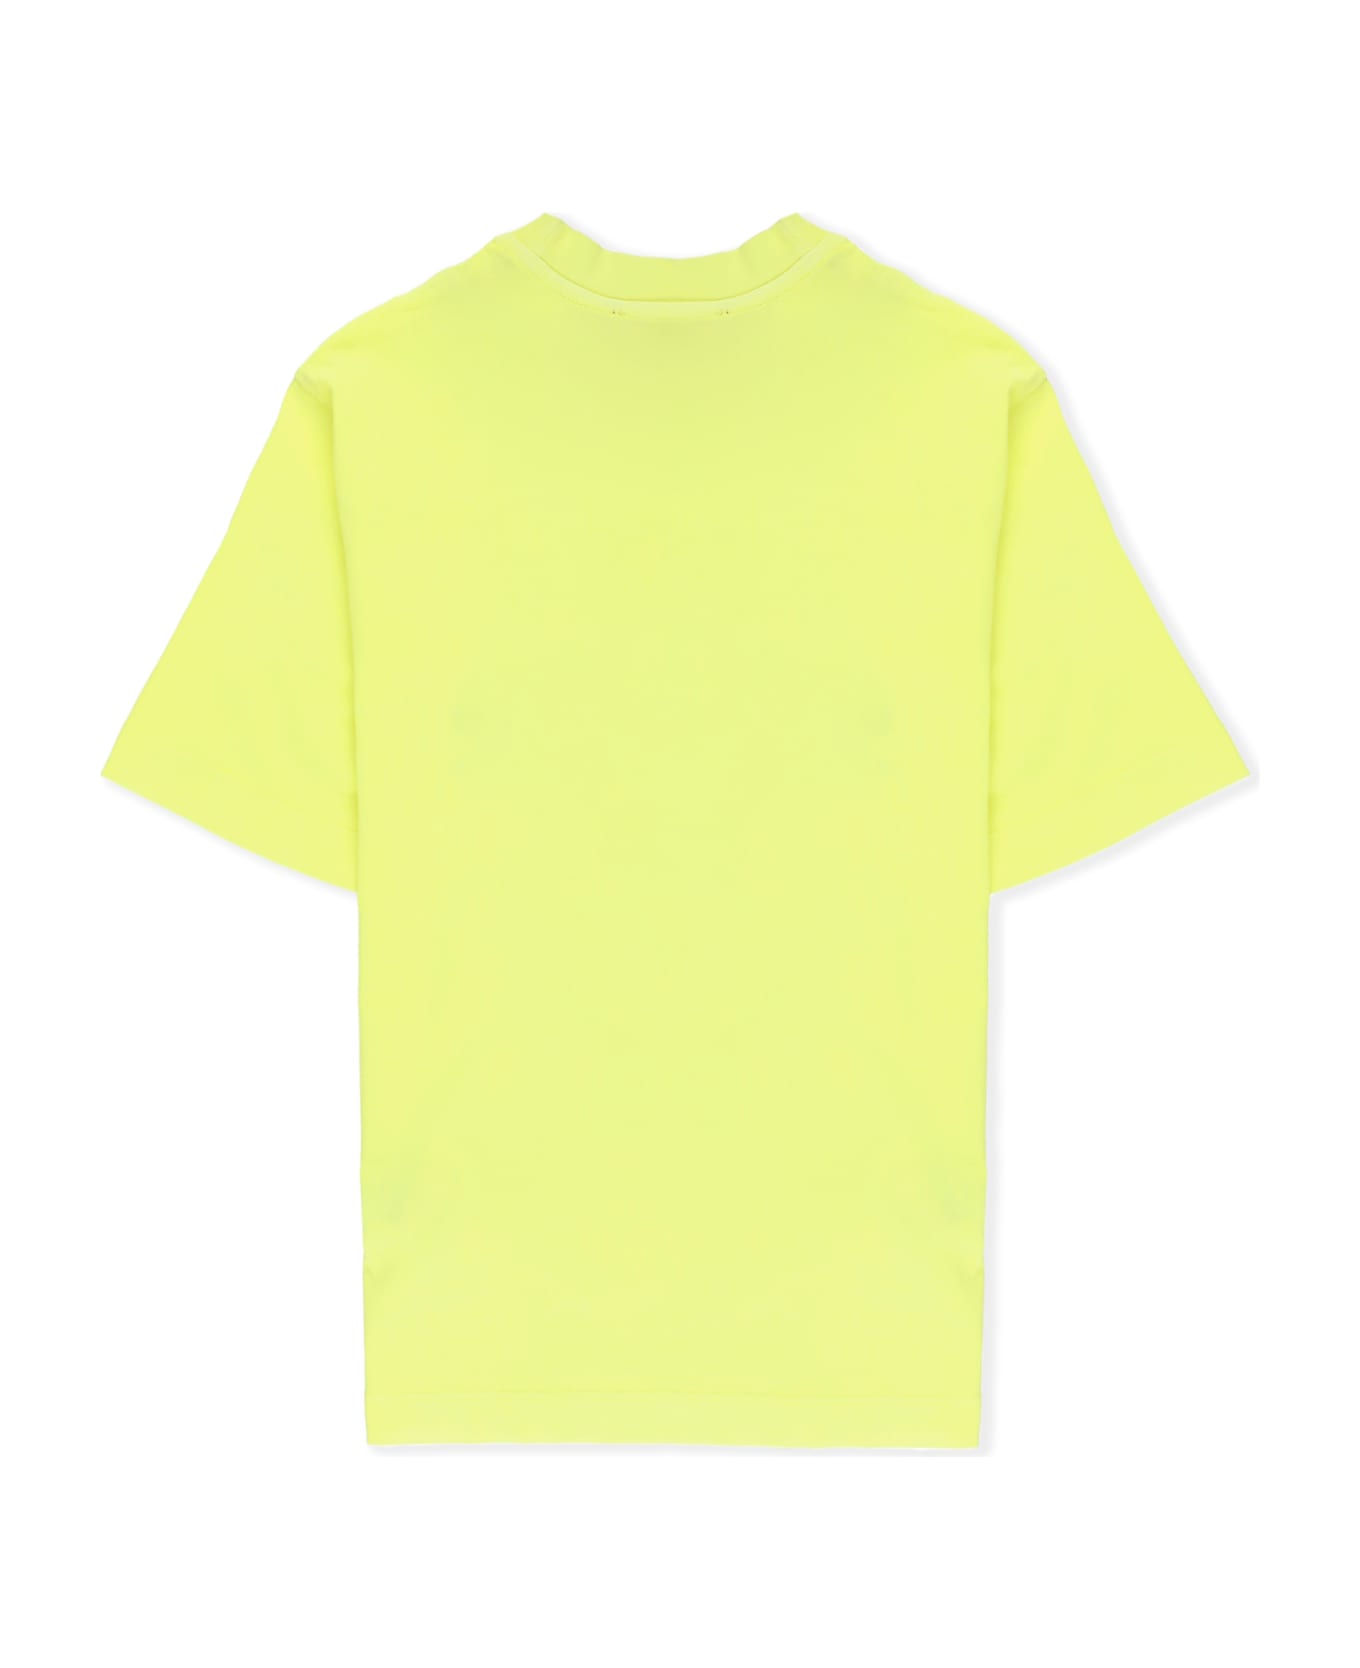 Diesel Tnuci T-shirt - Yellow